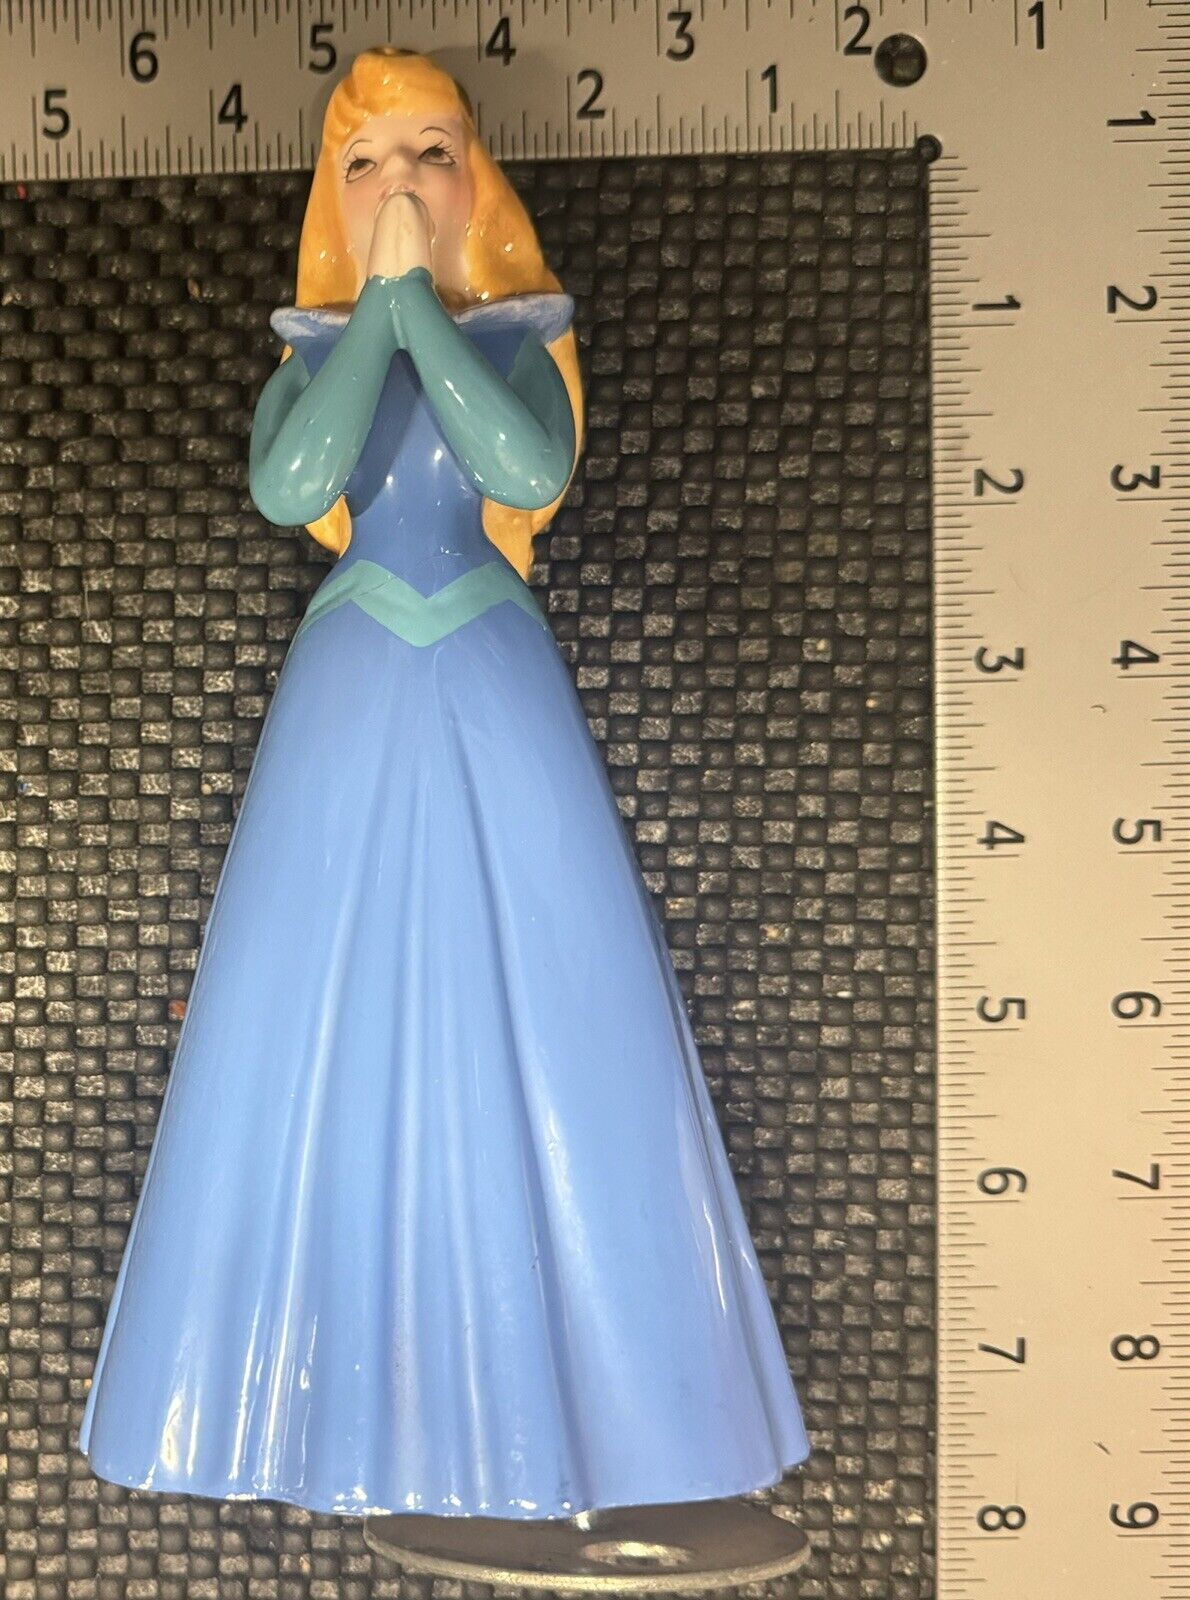 Disney Characters Sleeping Beauty 30th Anniversary Schmid Musical Figurine